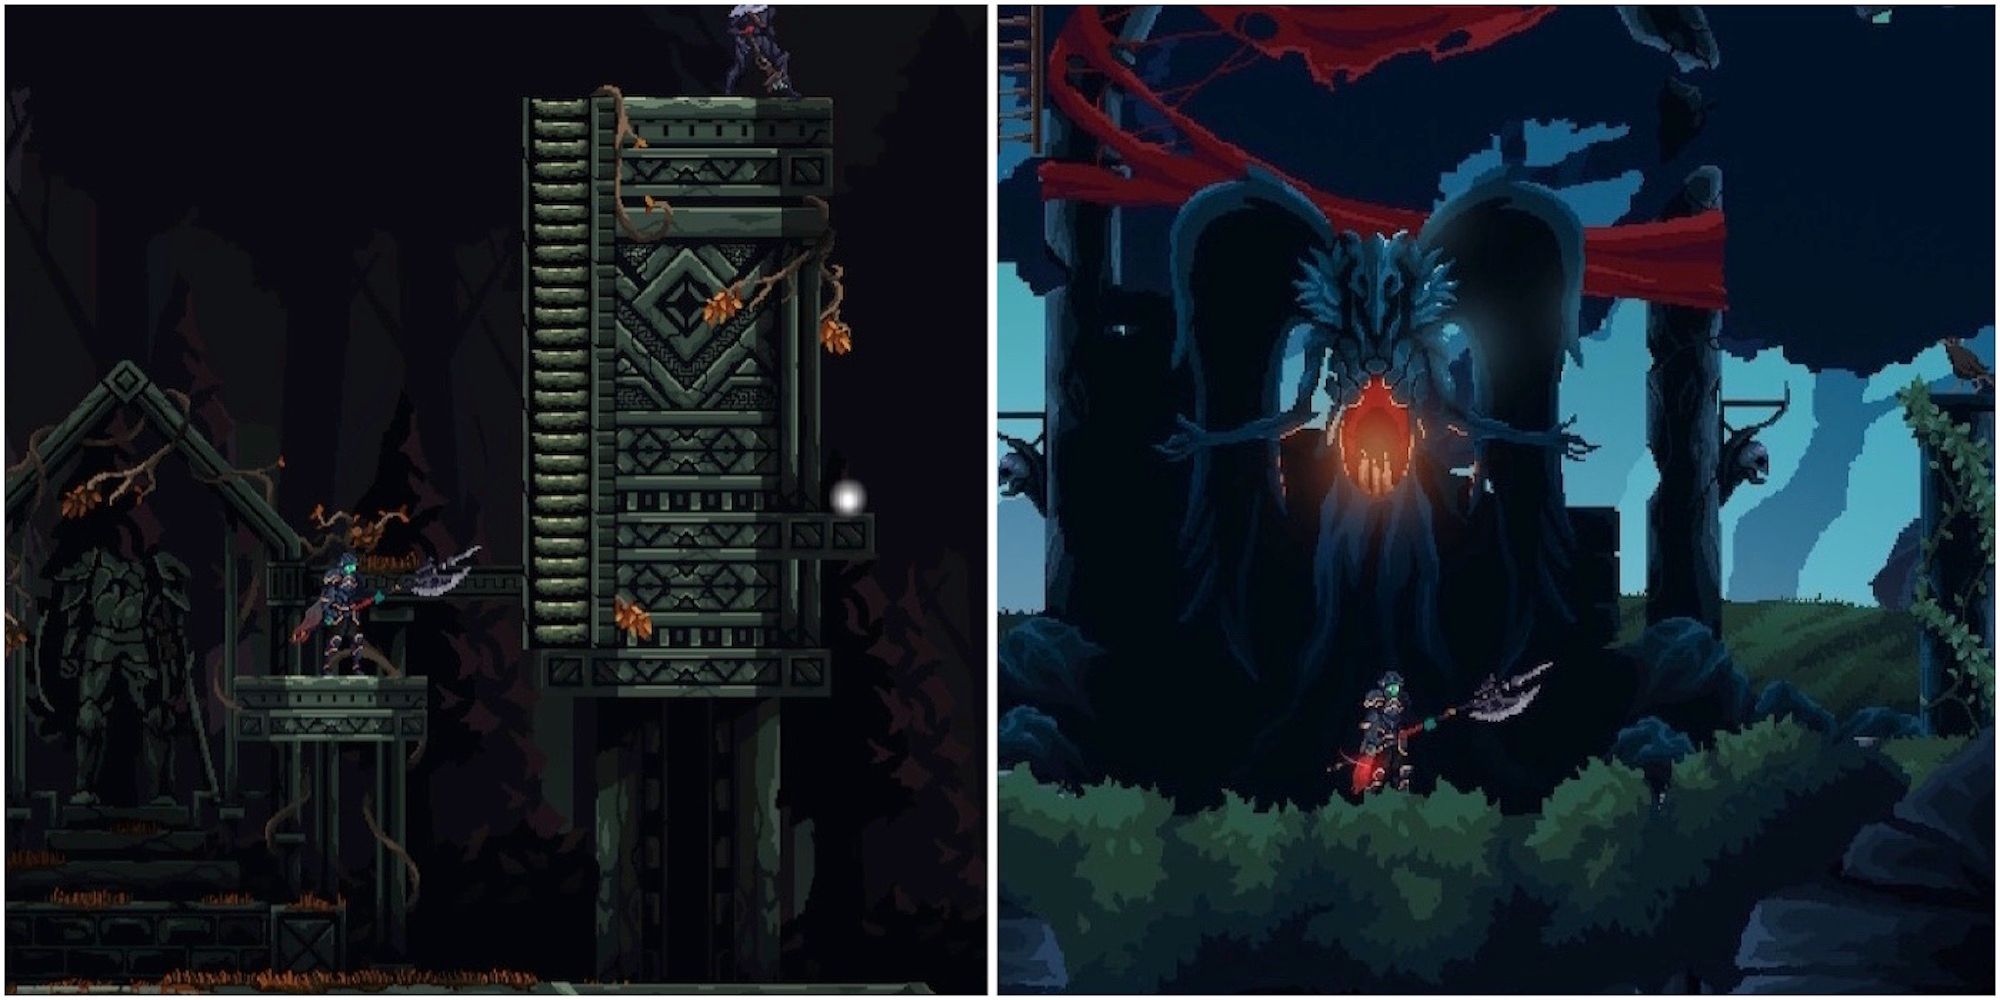 Death's Gambit: Afterlife  Full Game Part 1 Gameplay Walkthrough